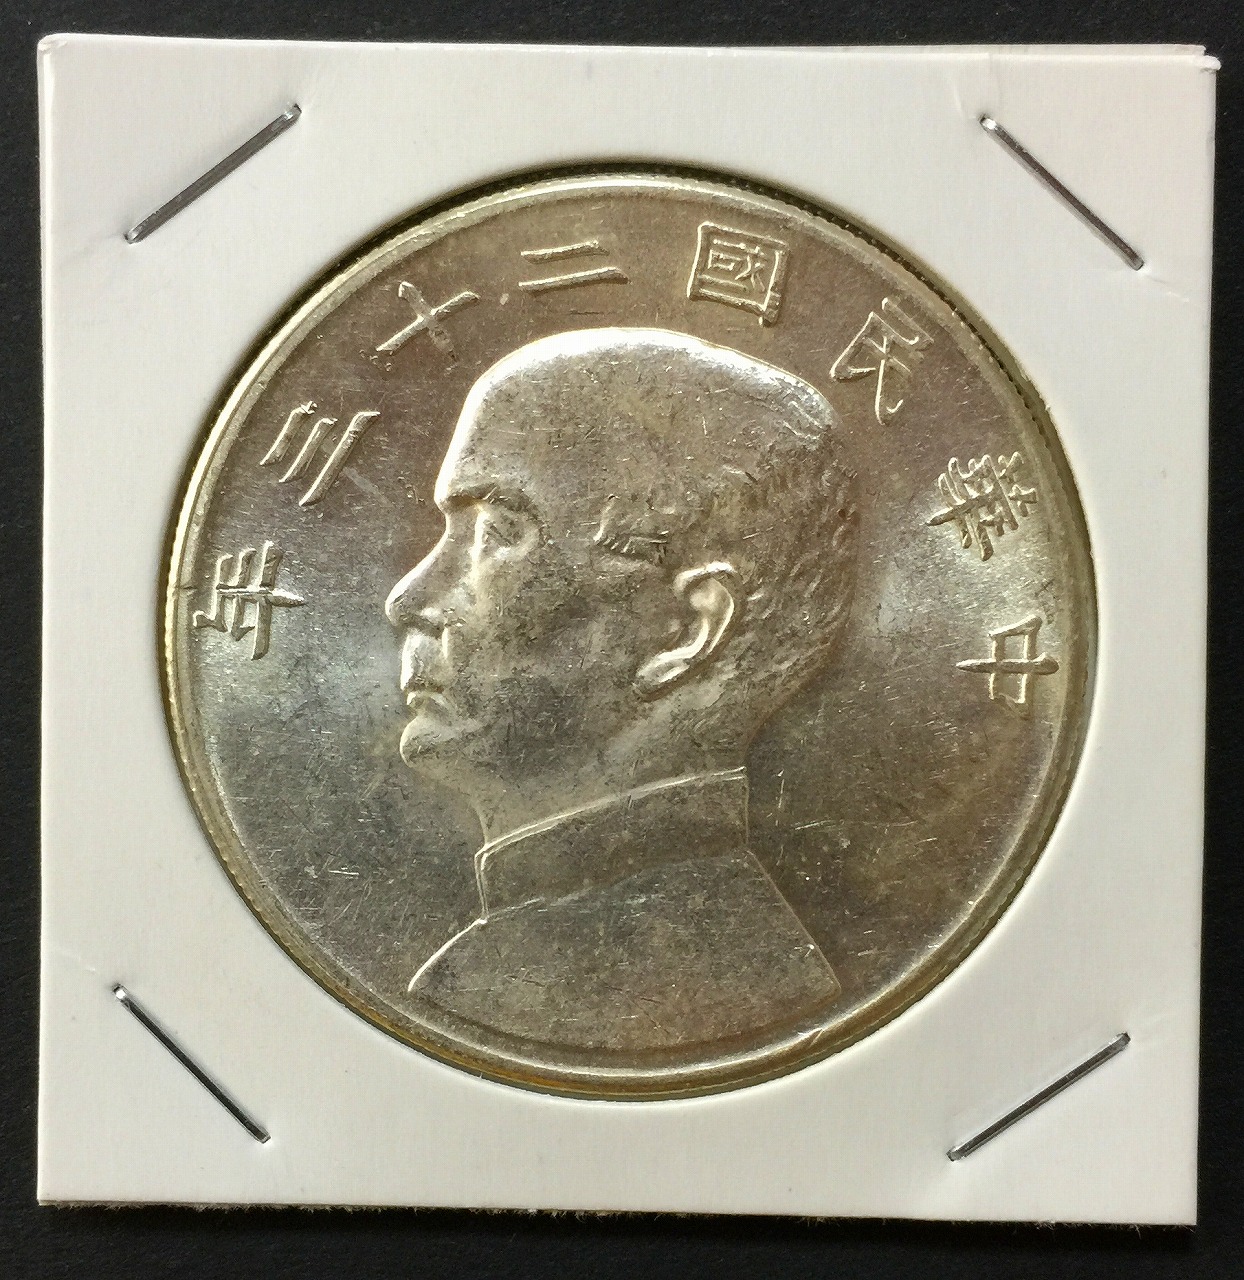 PCGS MS62 孫文 壹圓 中華民国23年 中国 古銭 ジャンク 1円銀貨